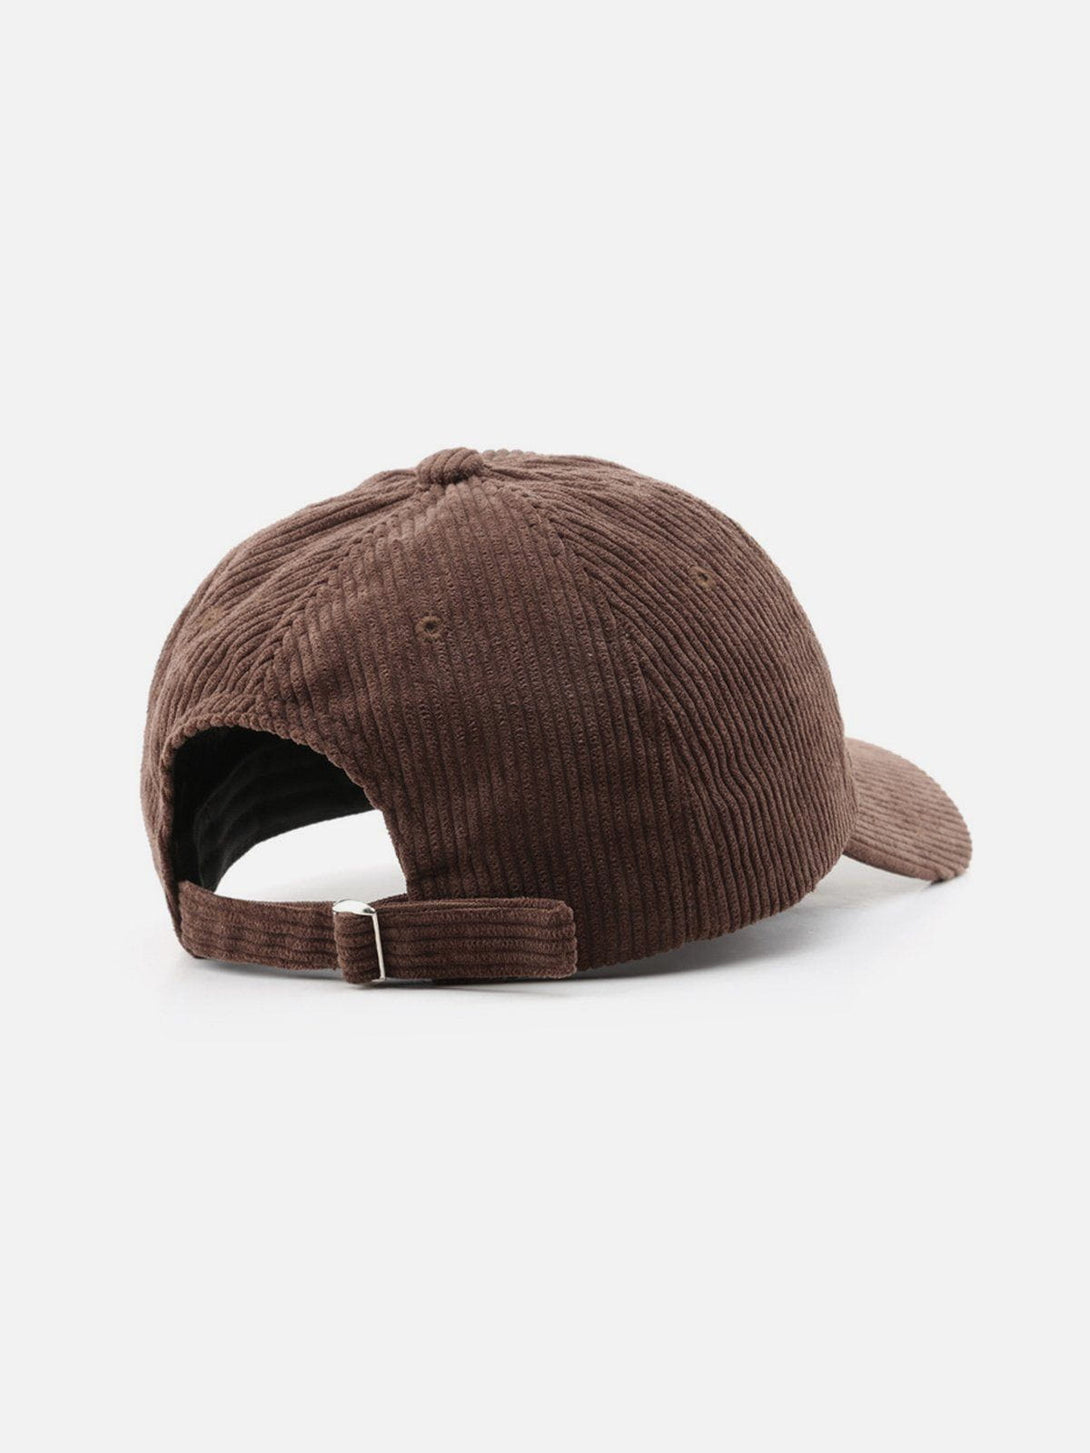 Majesda® - Alphabet Patchwork Hat- Outfit Ideas - Streetwear Fashion - majesda.com